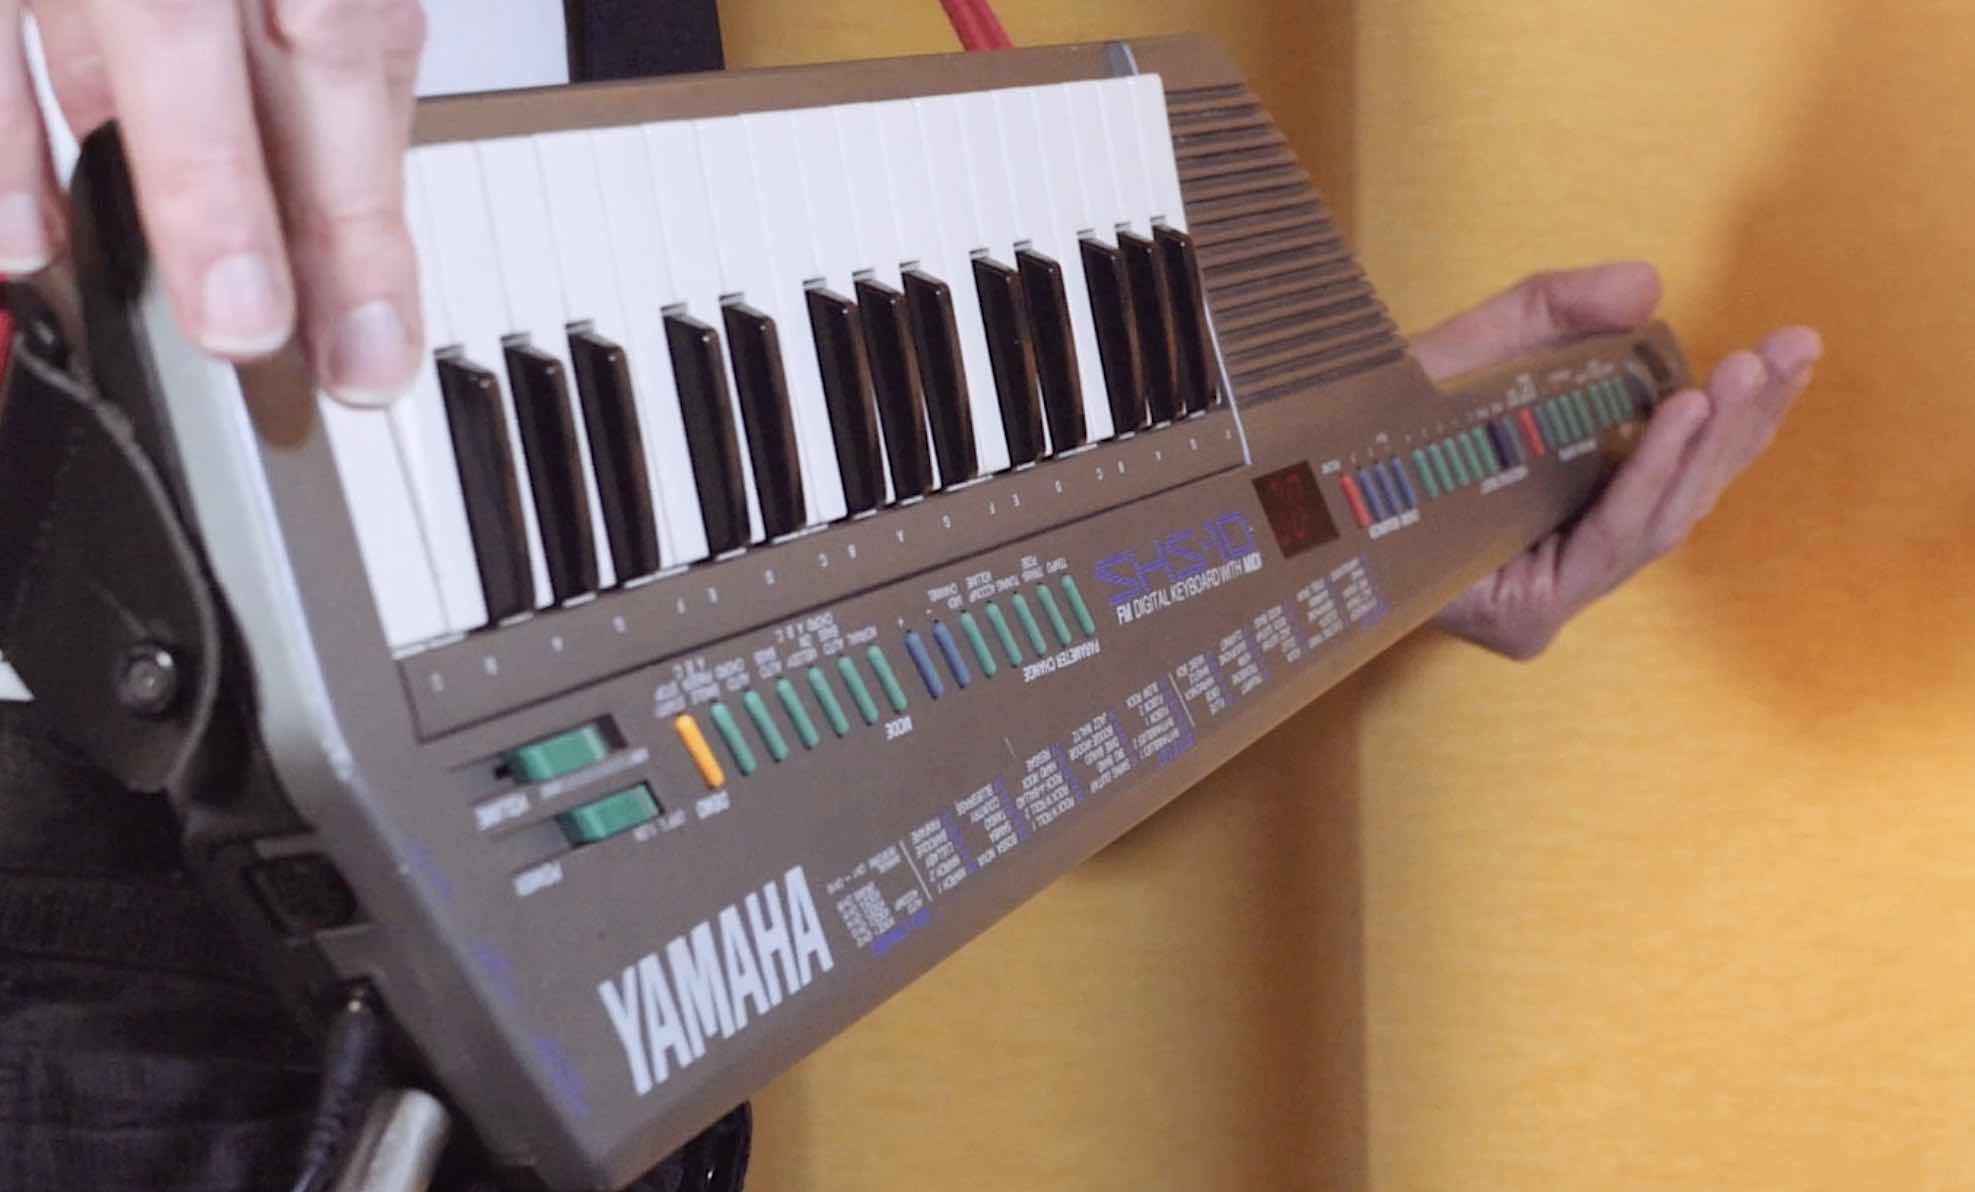 Yamaha SHS-10 keytar being played